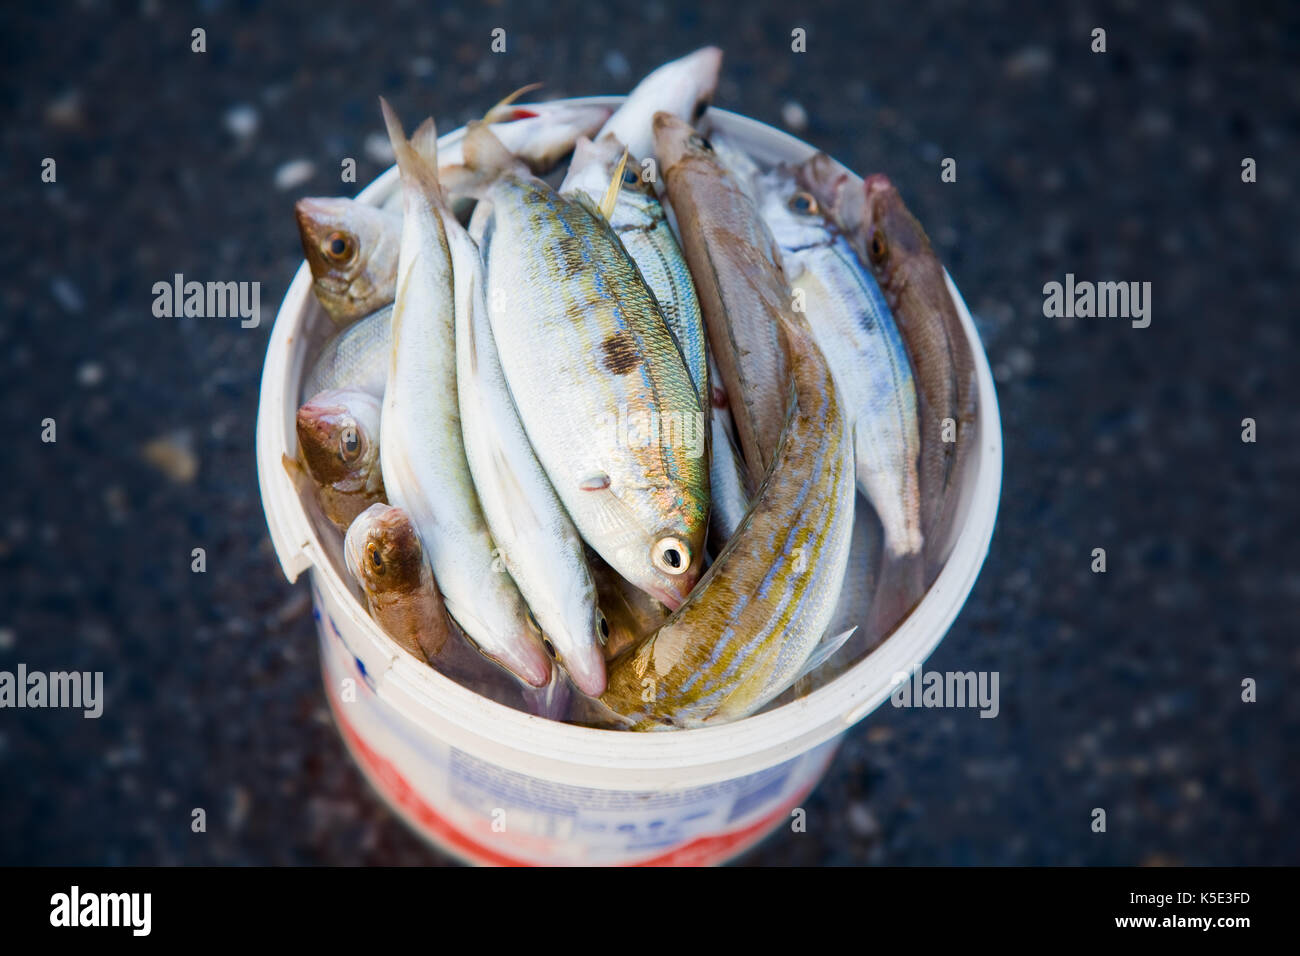 https://c8.alamy.com/comp/K5E3FD/close-up-of-a-bucket-full-of-freshly-caught-fish-K5E3FD.jpg